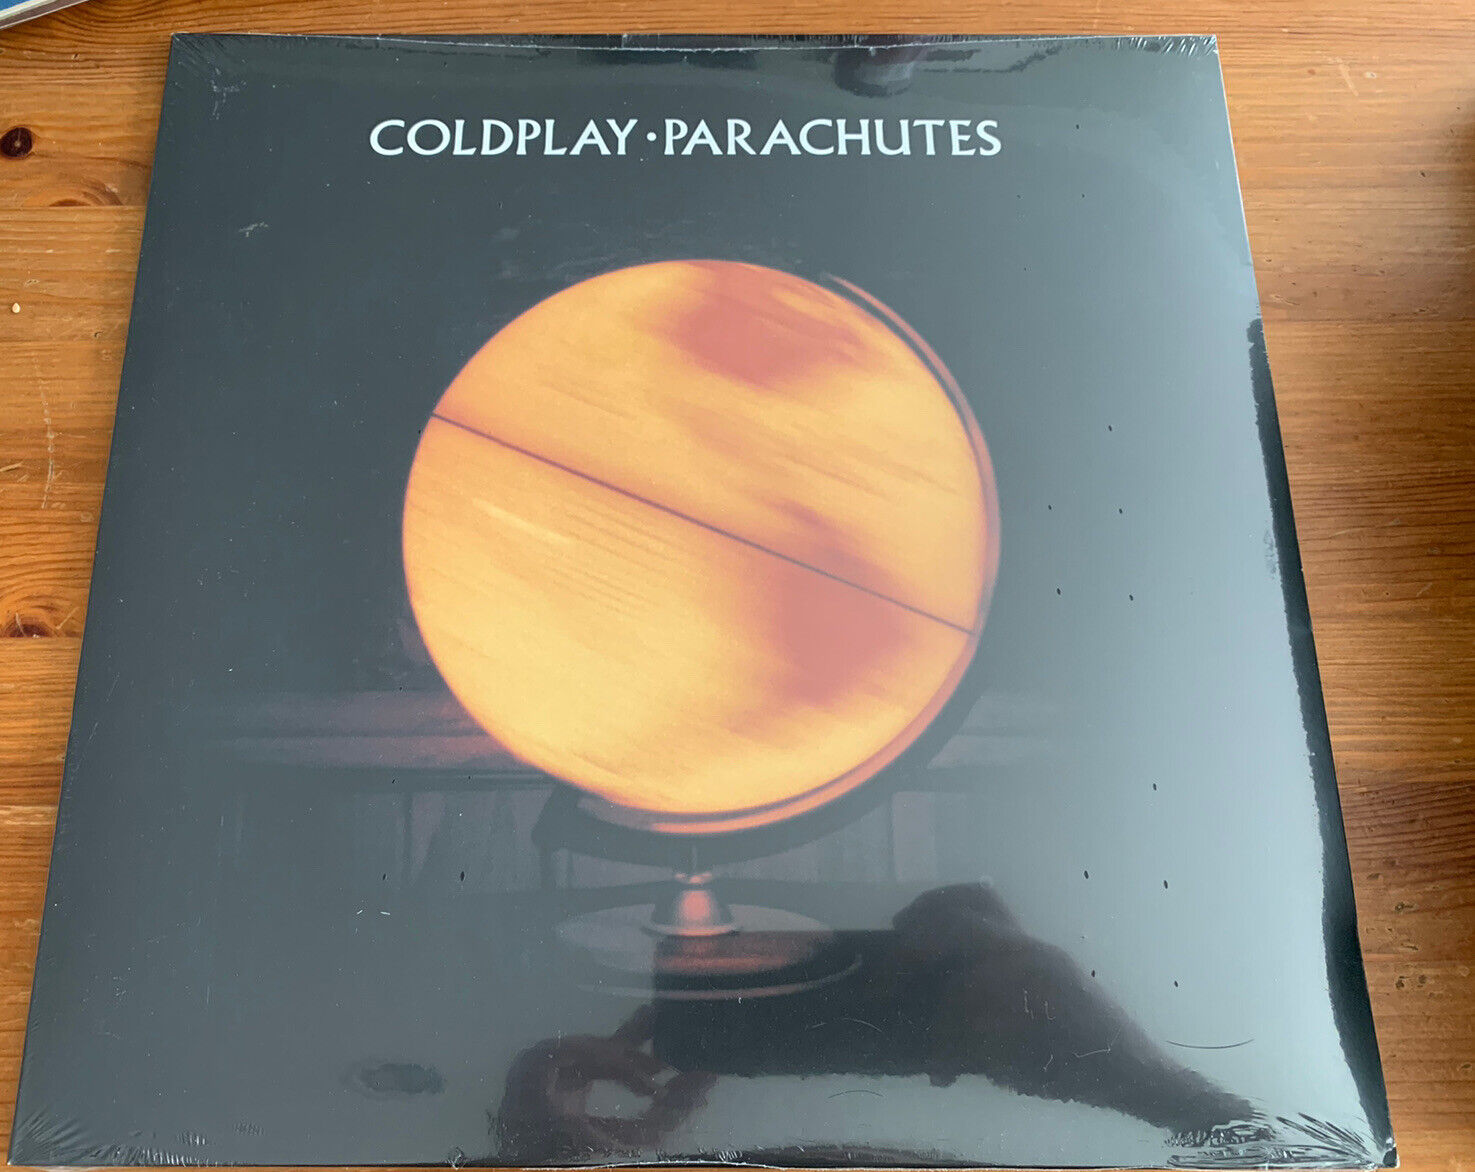 Coldplay ‎- Parachutes LP - Vinyl Album - SEALED NEW RECORD for Sale -  Fleetwoodmac.net